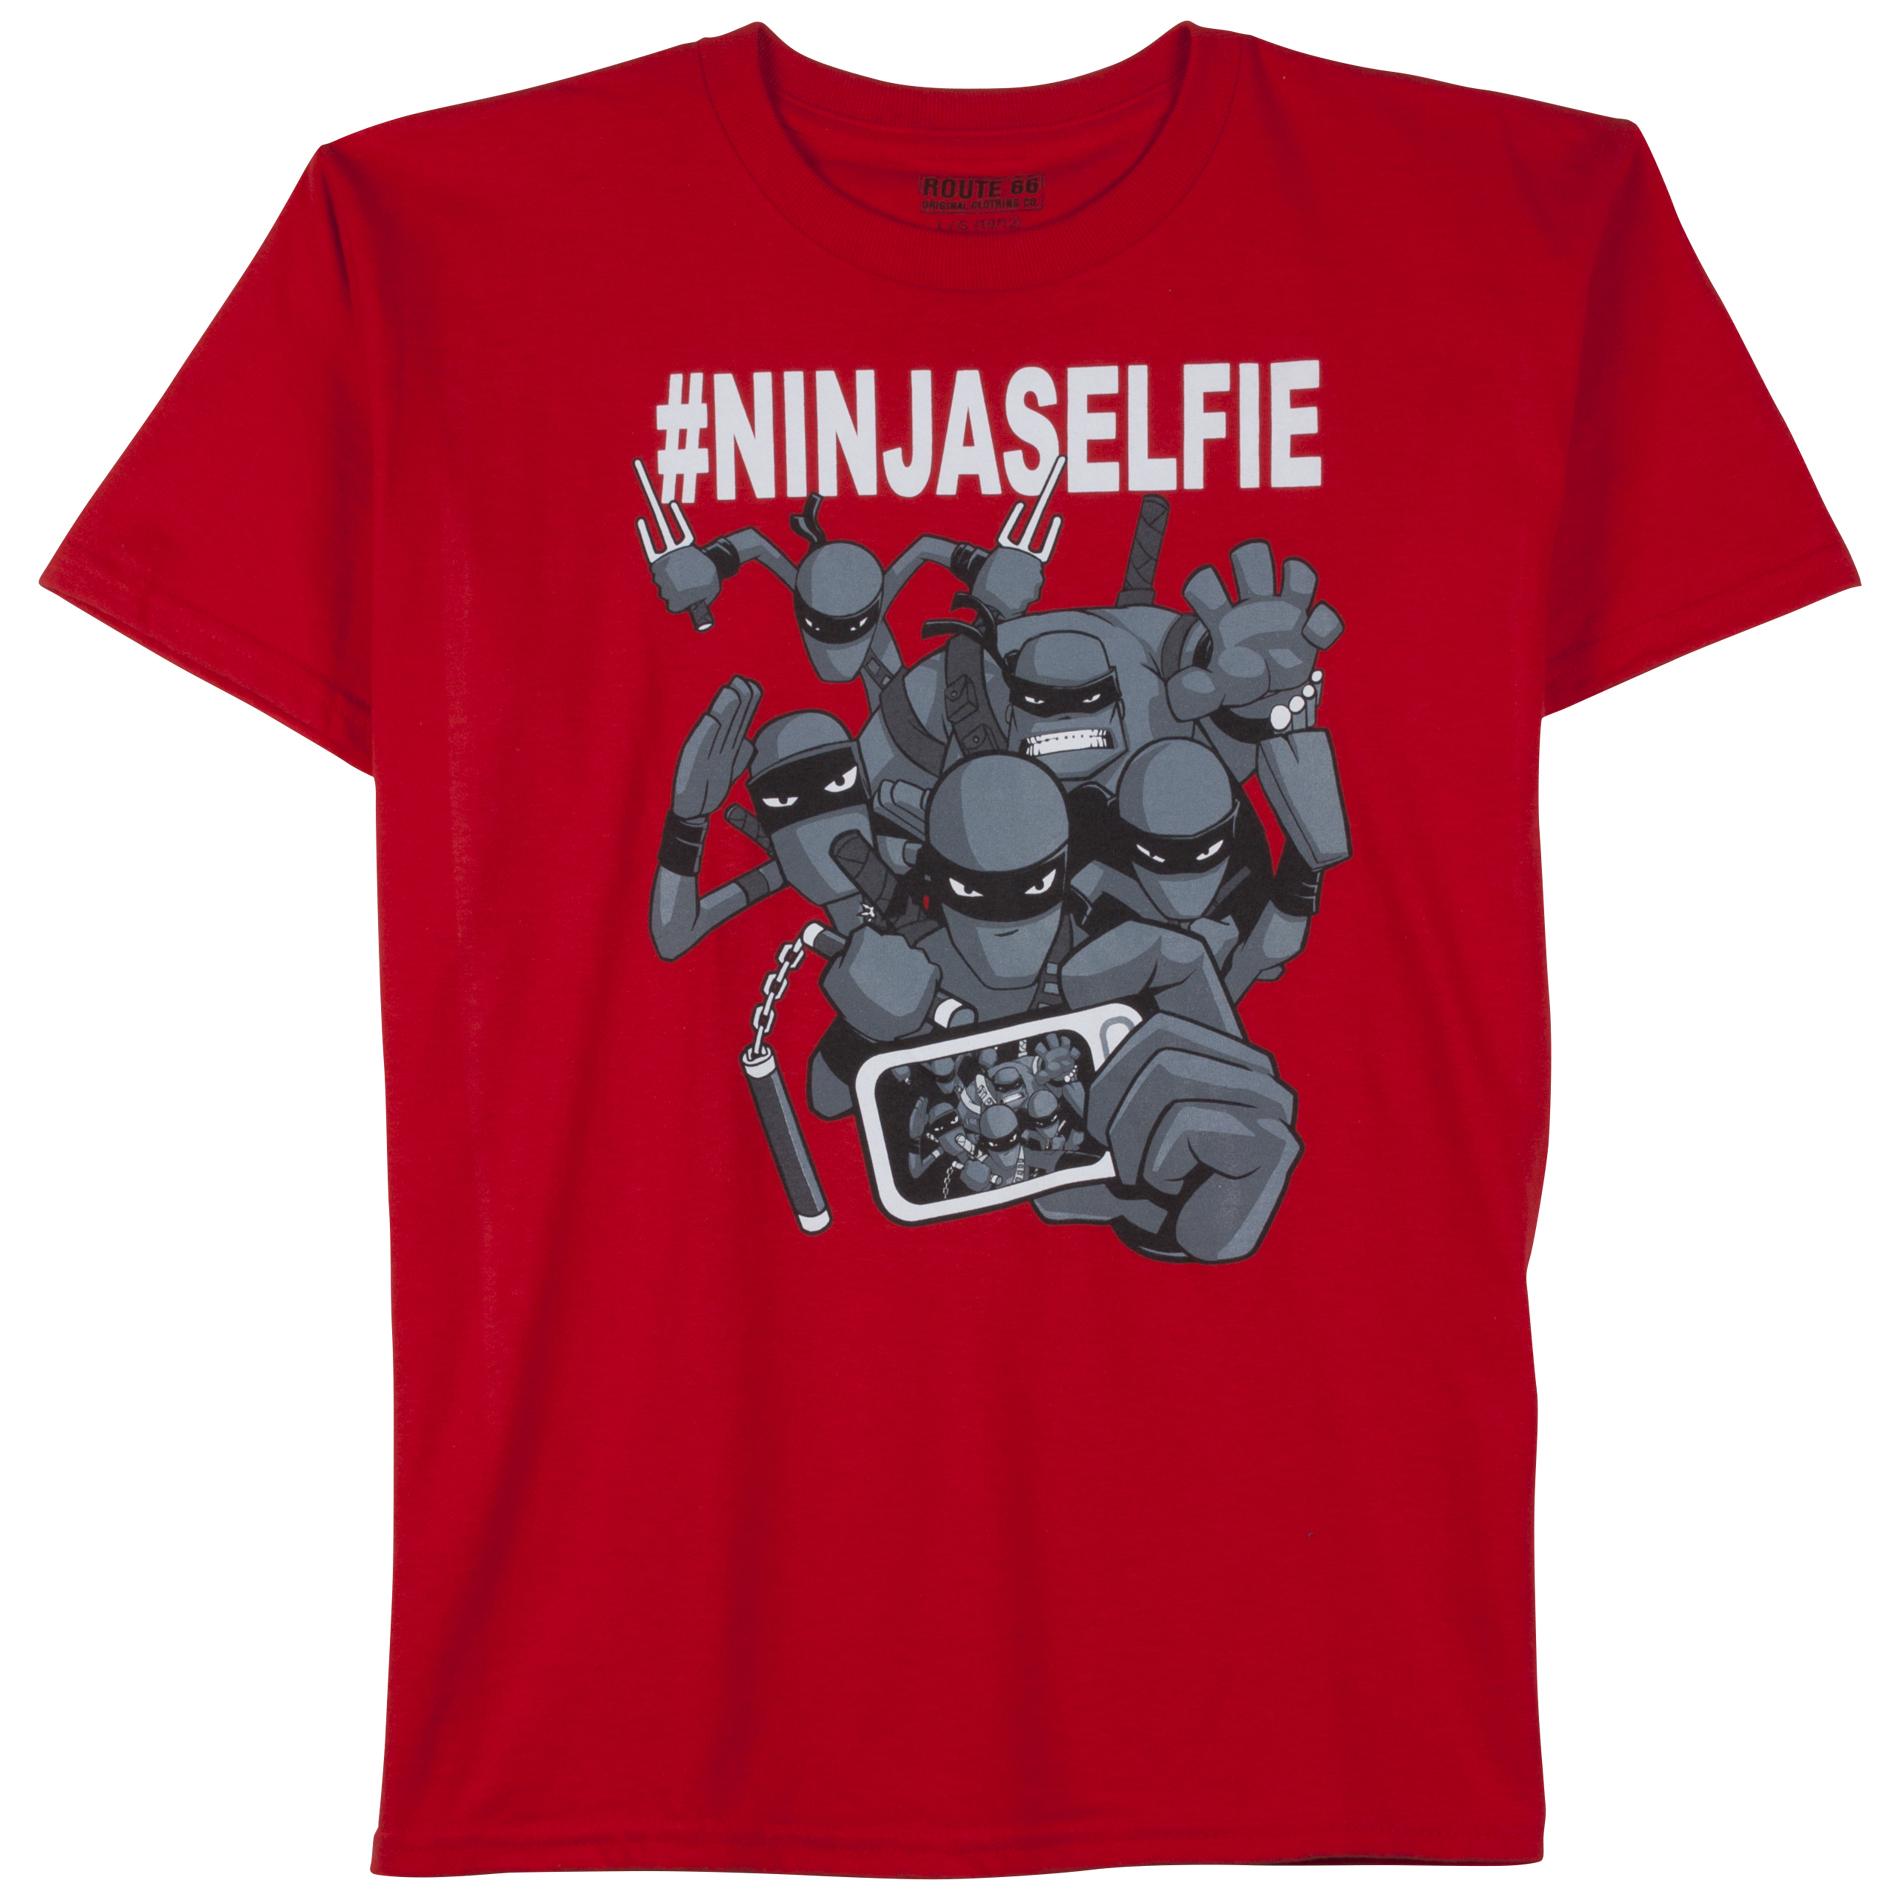 Route 66 Boy's Graphic T-Shirt - Ninja Selfie